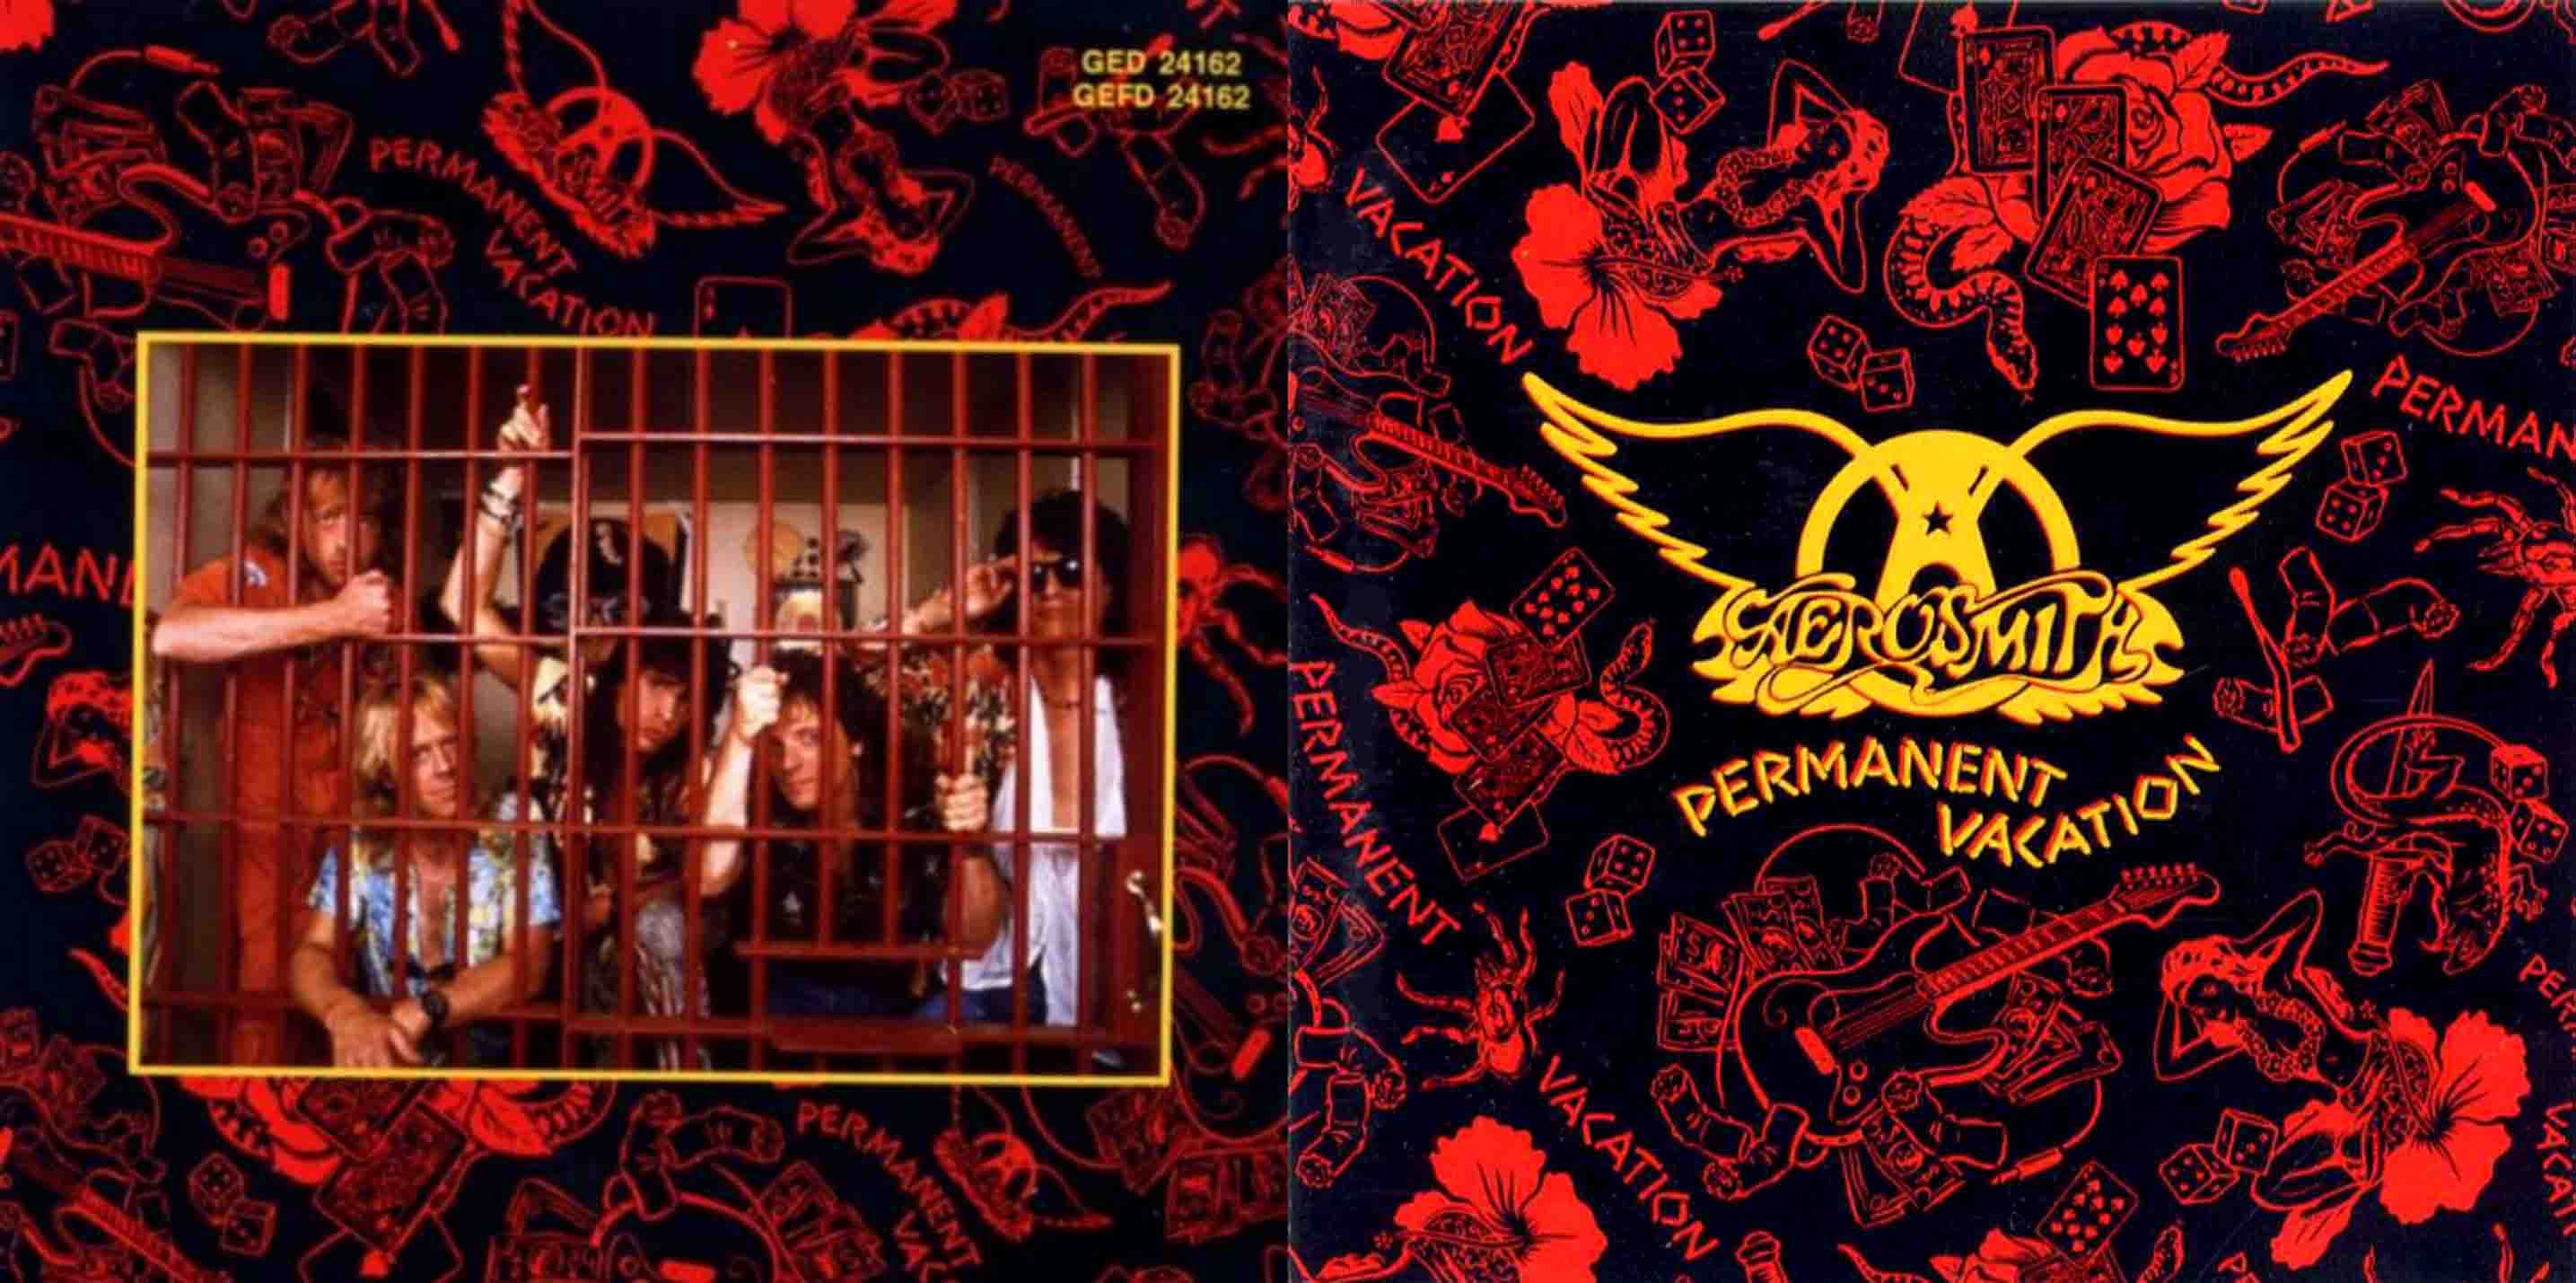 Best collection 2. Aerosmith 1987. Aerosmith permanent vacation обложка. Aerosmith permanent vacation 1987. Aerosmith дискография.